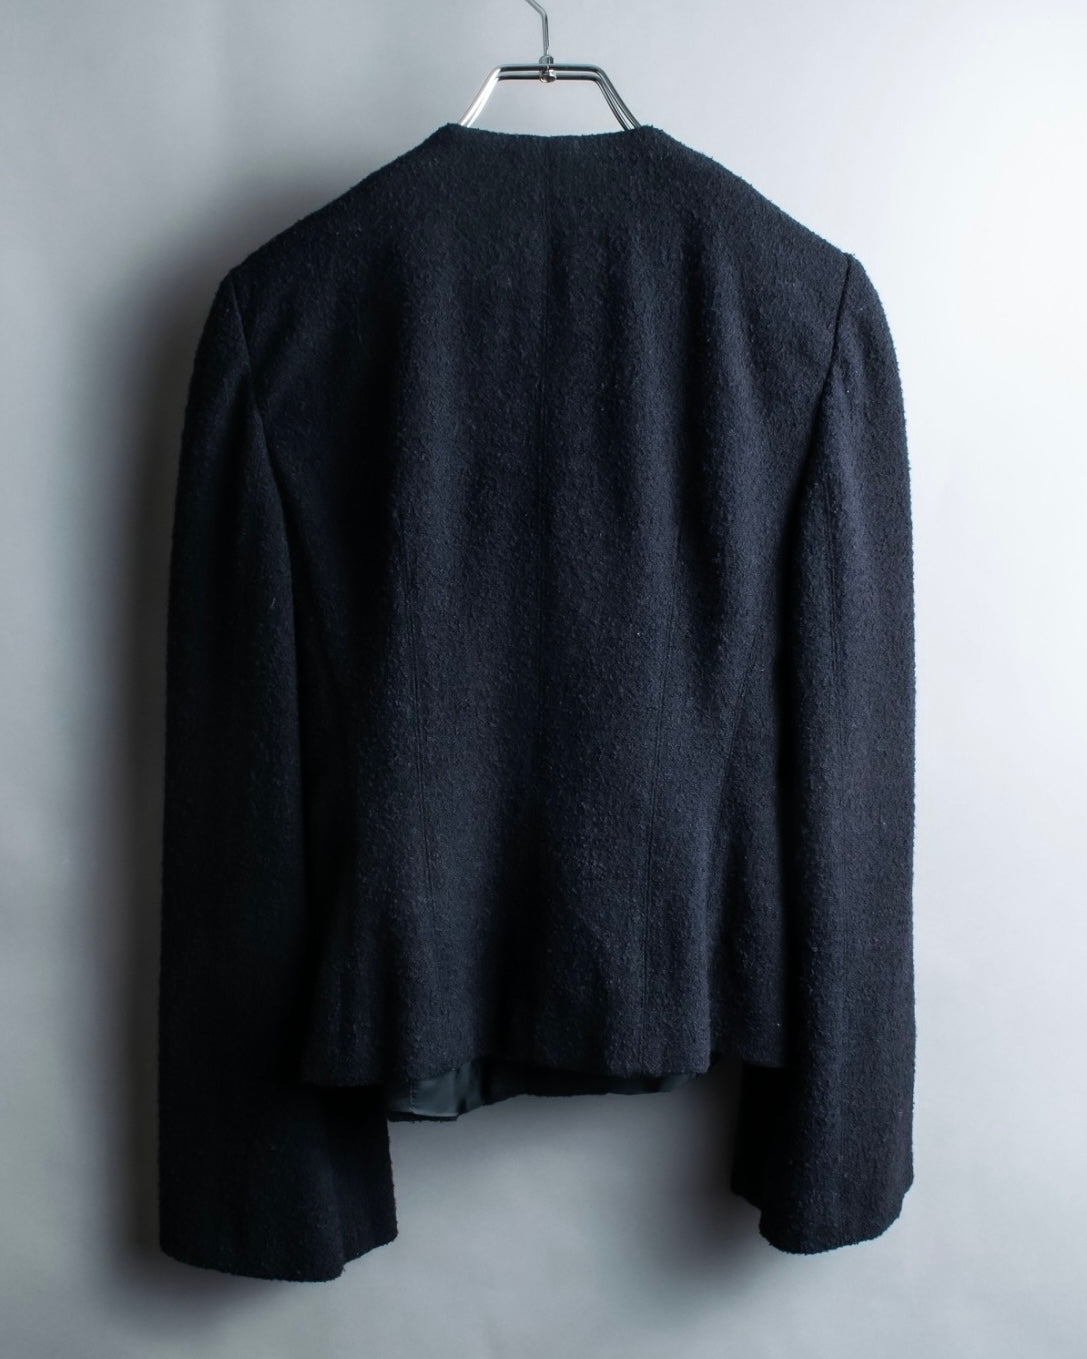 "EMPORIO ARMANI" Three-line short fly front jacket